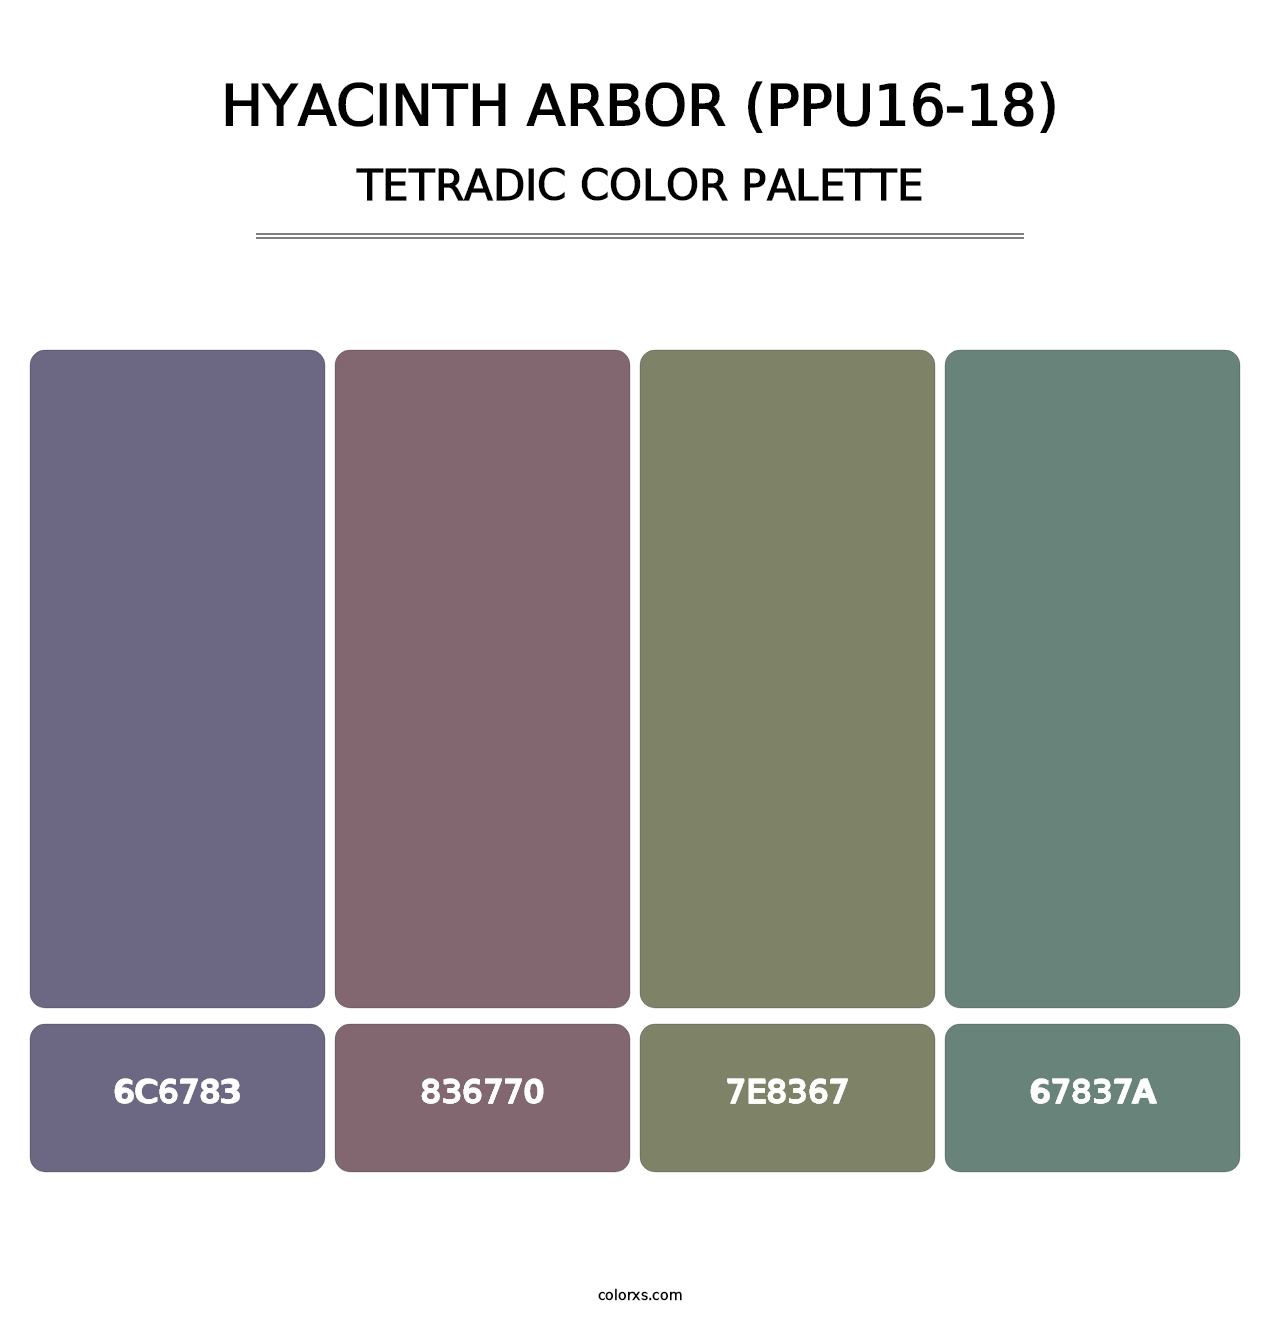 Hyacinth Arbor (PPU16-18) - Tetradic Color Palette